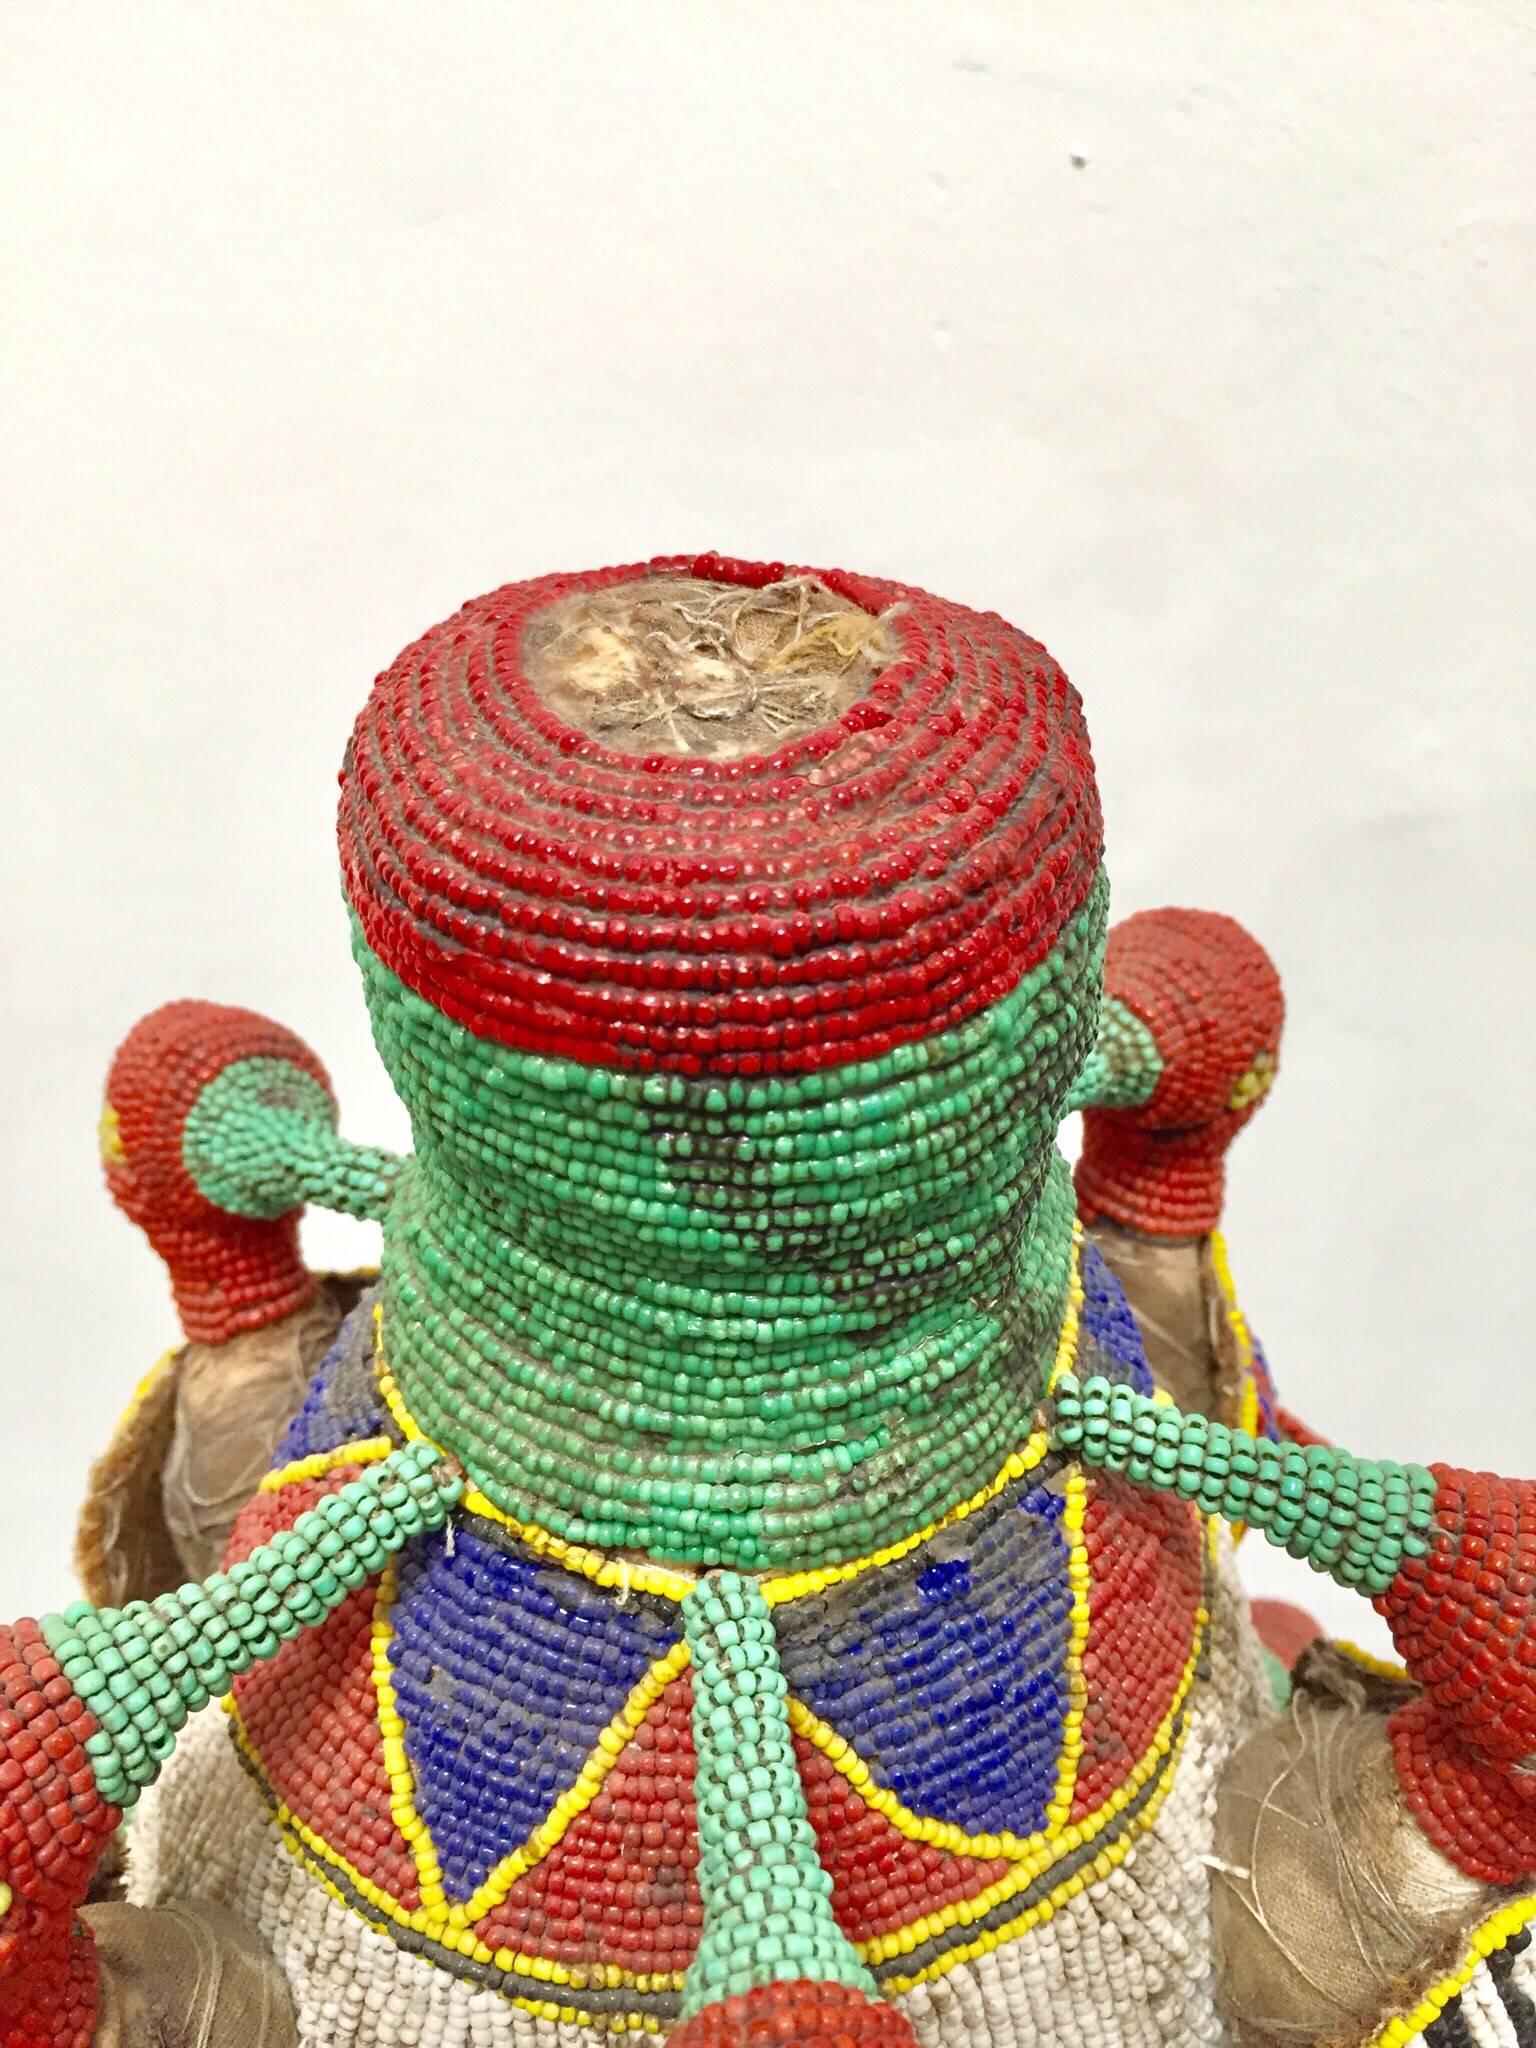 Metal Yoruba Nigeria African Royal Beaded Headdress Crown on Stand